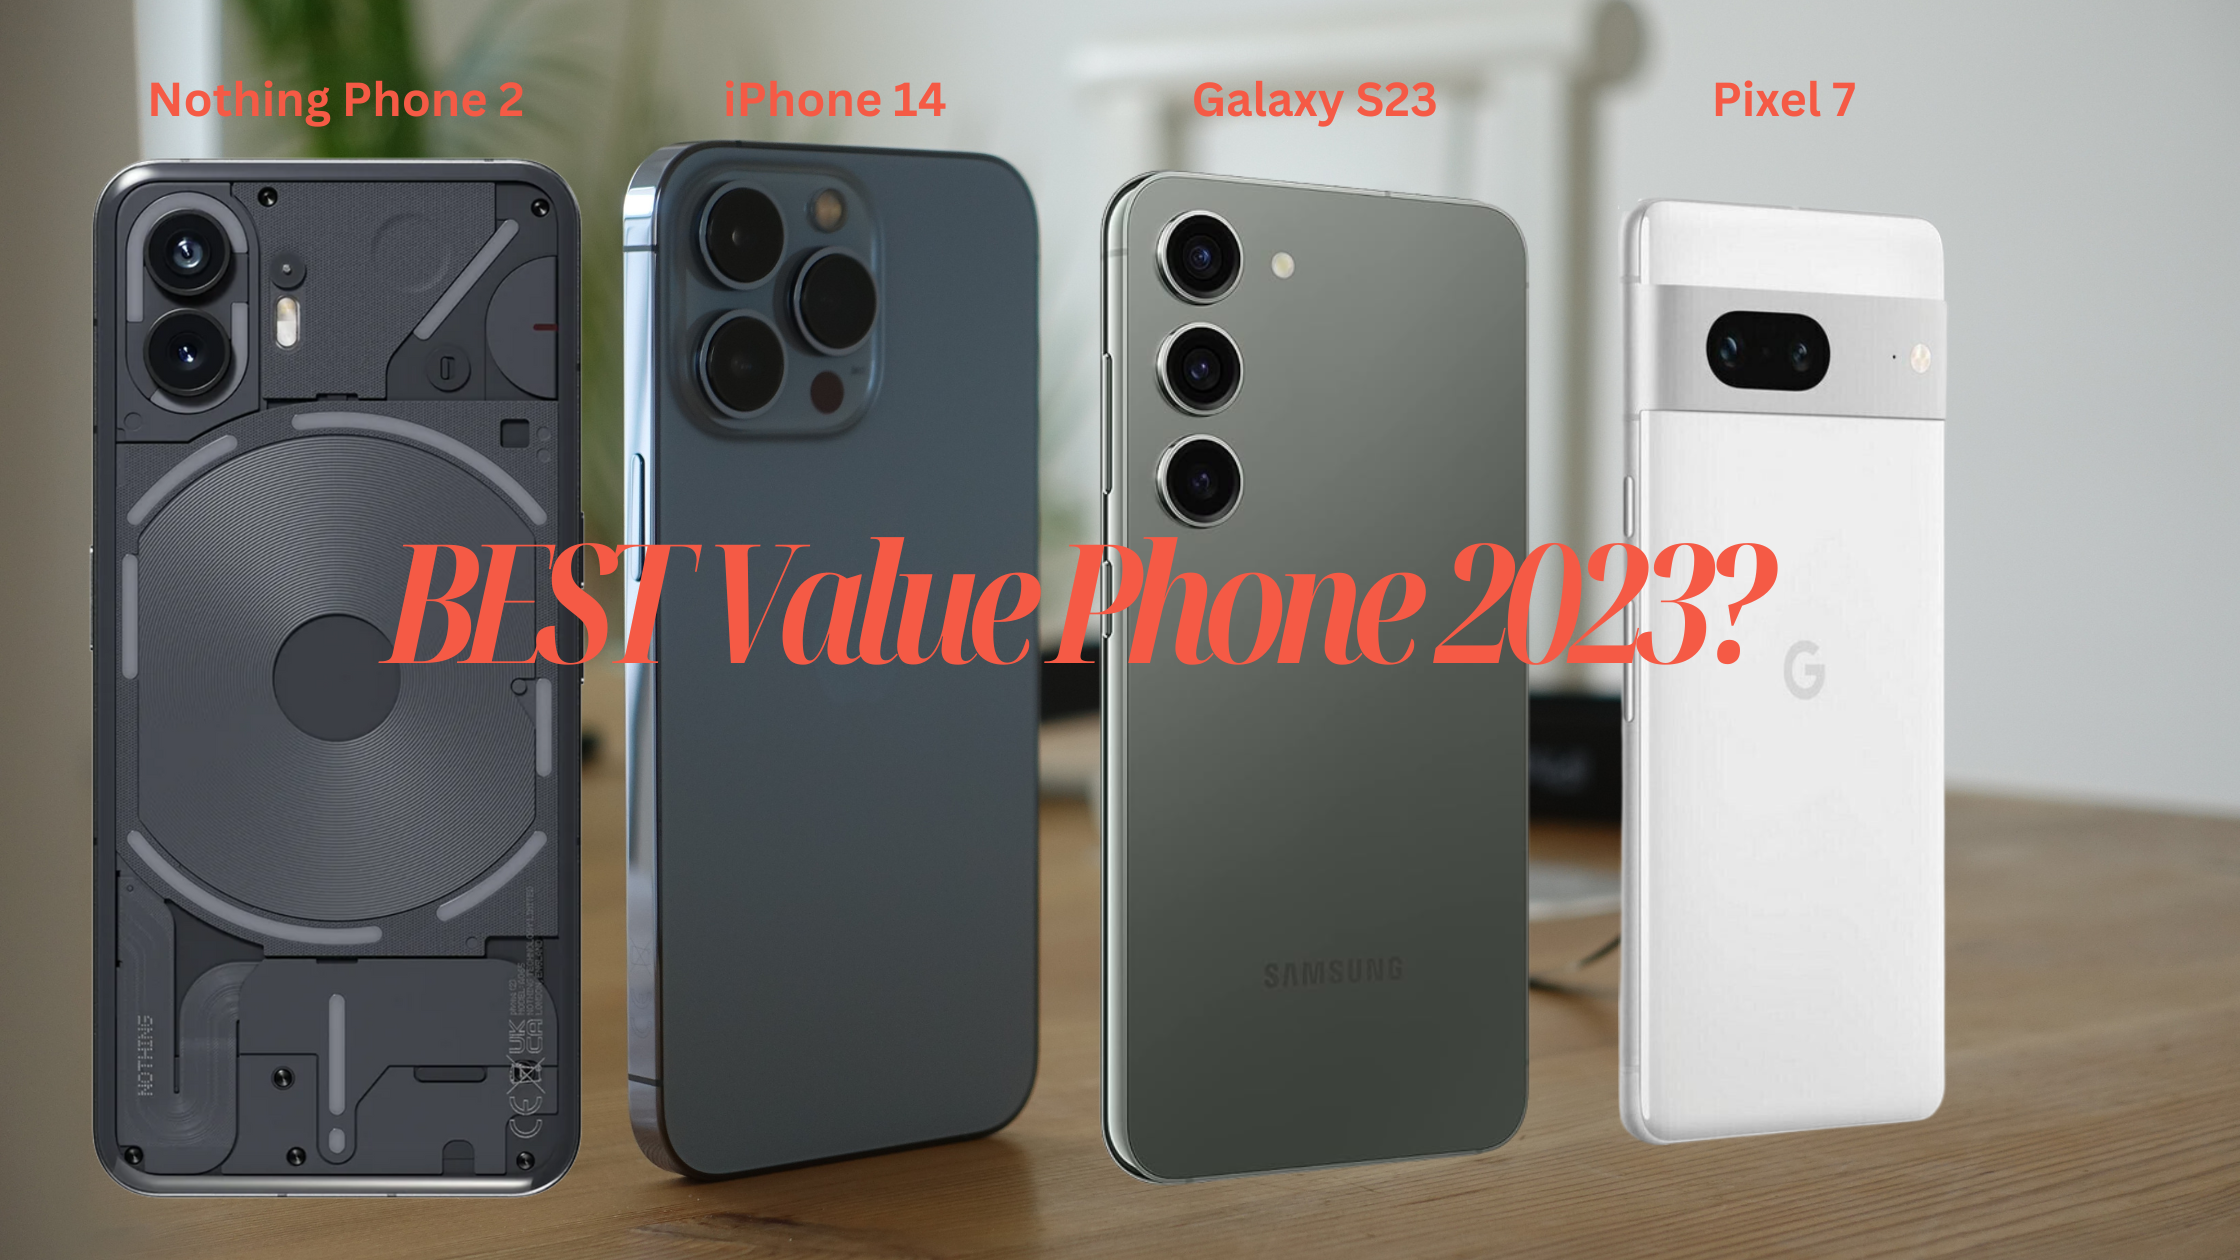 Nothing Phone 2 - BEST Value Phone 2023?